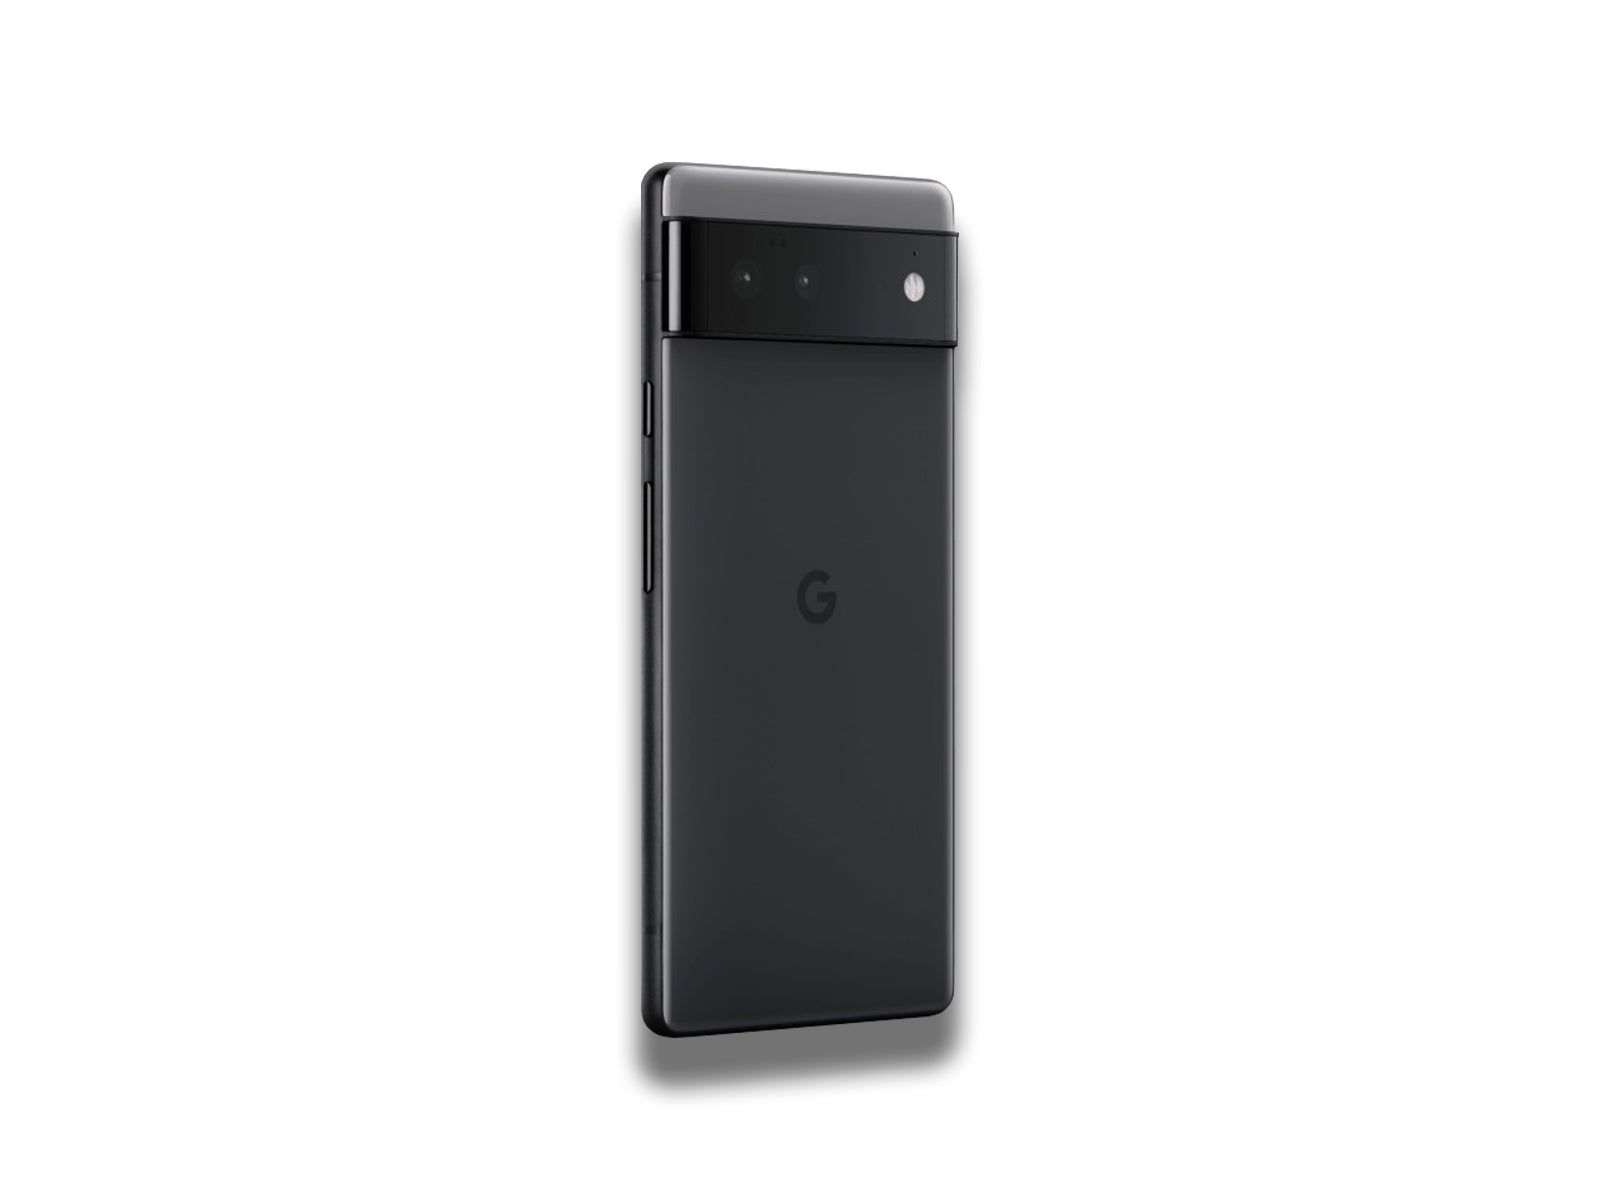 Google Pixel 6 In Stormy Black Back